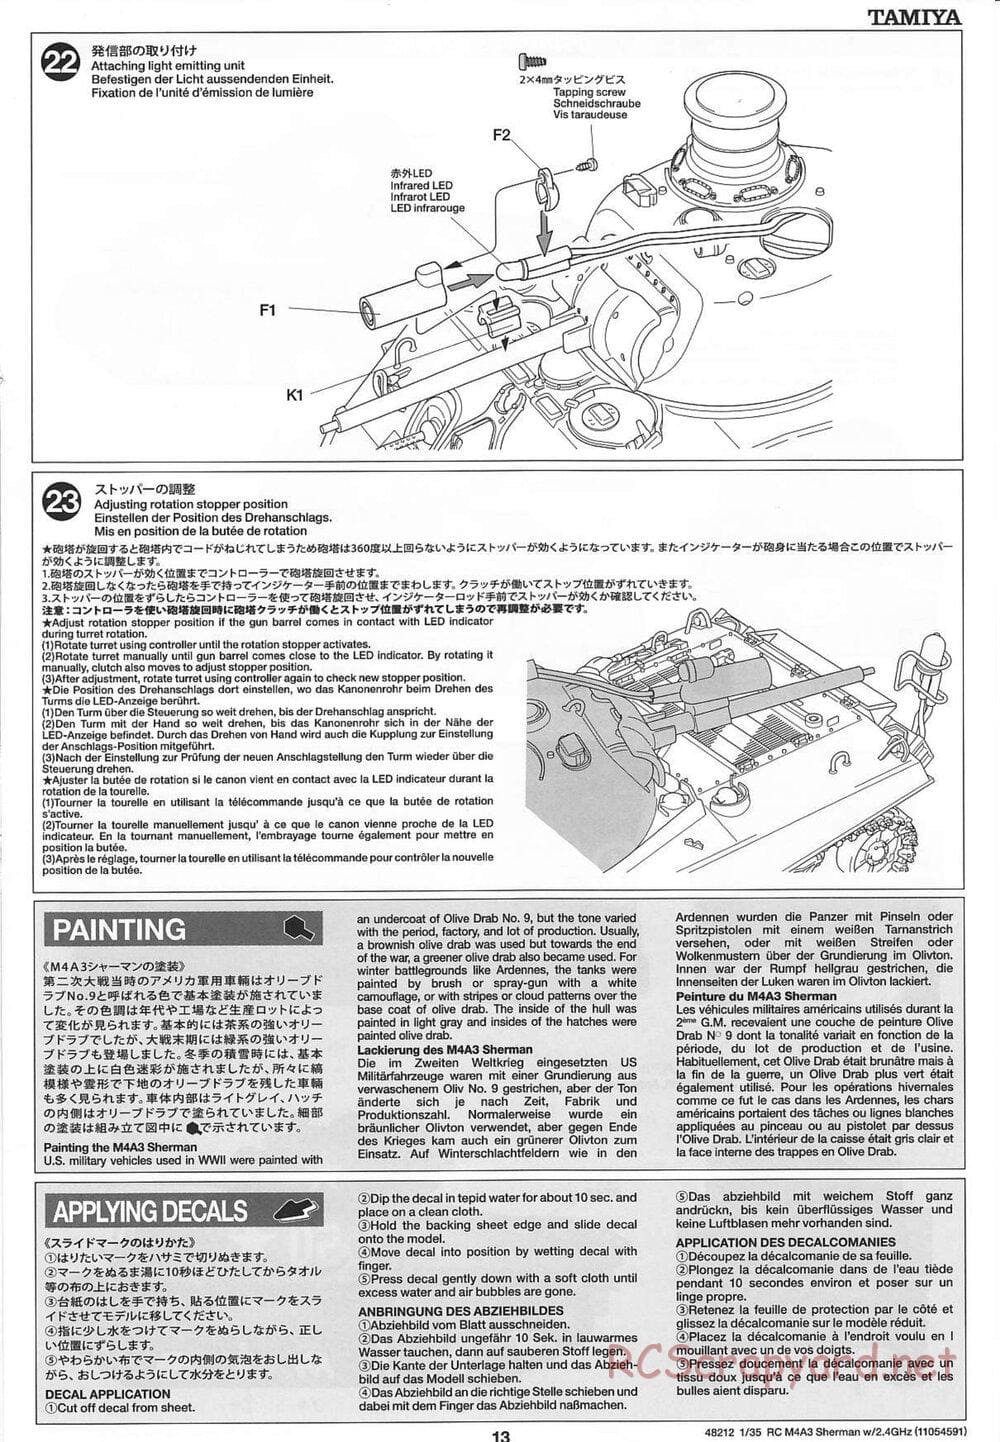 Tamiya - US Medium Tank M4A3 Sherman - 1/35 Scale Chassis - Manual - Page 13